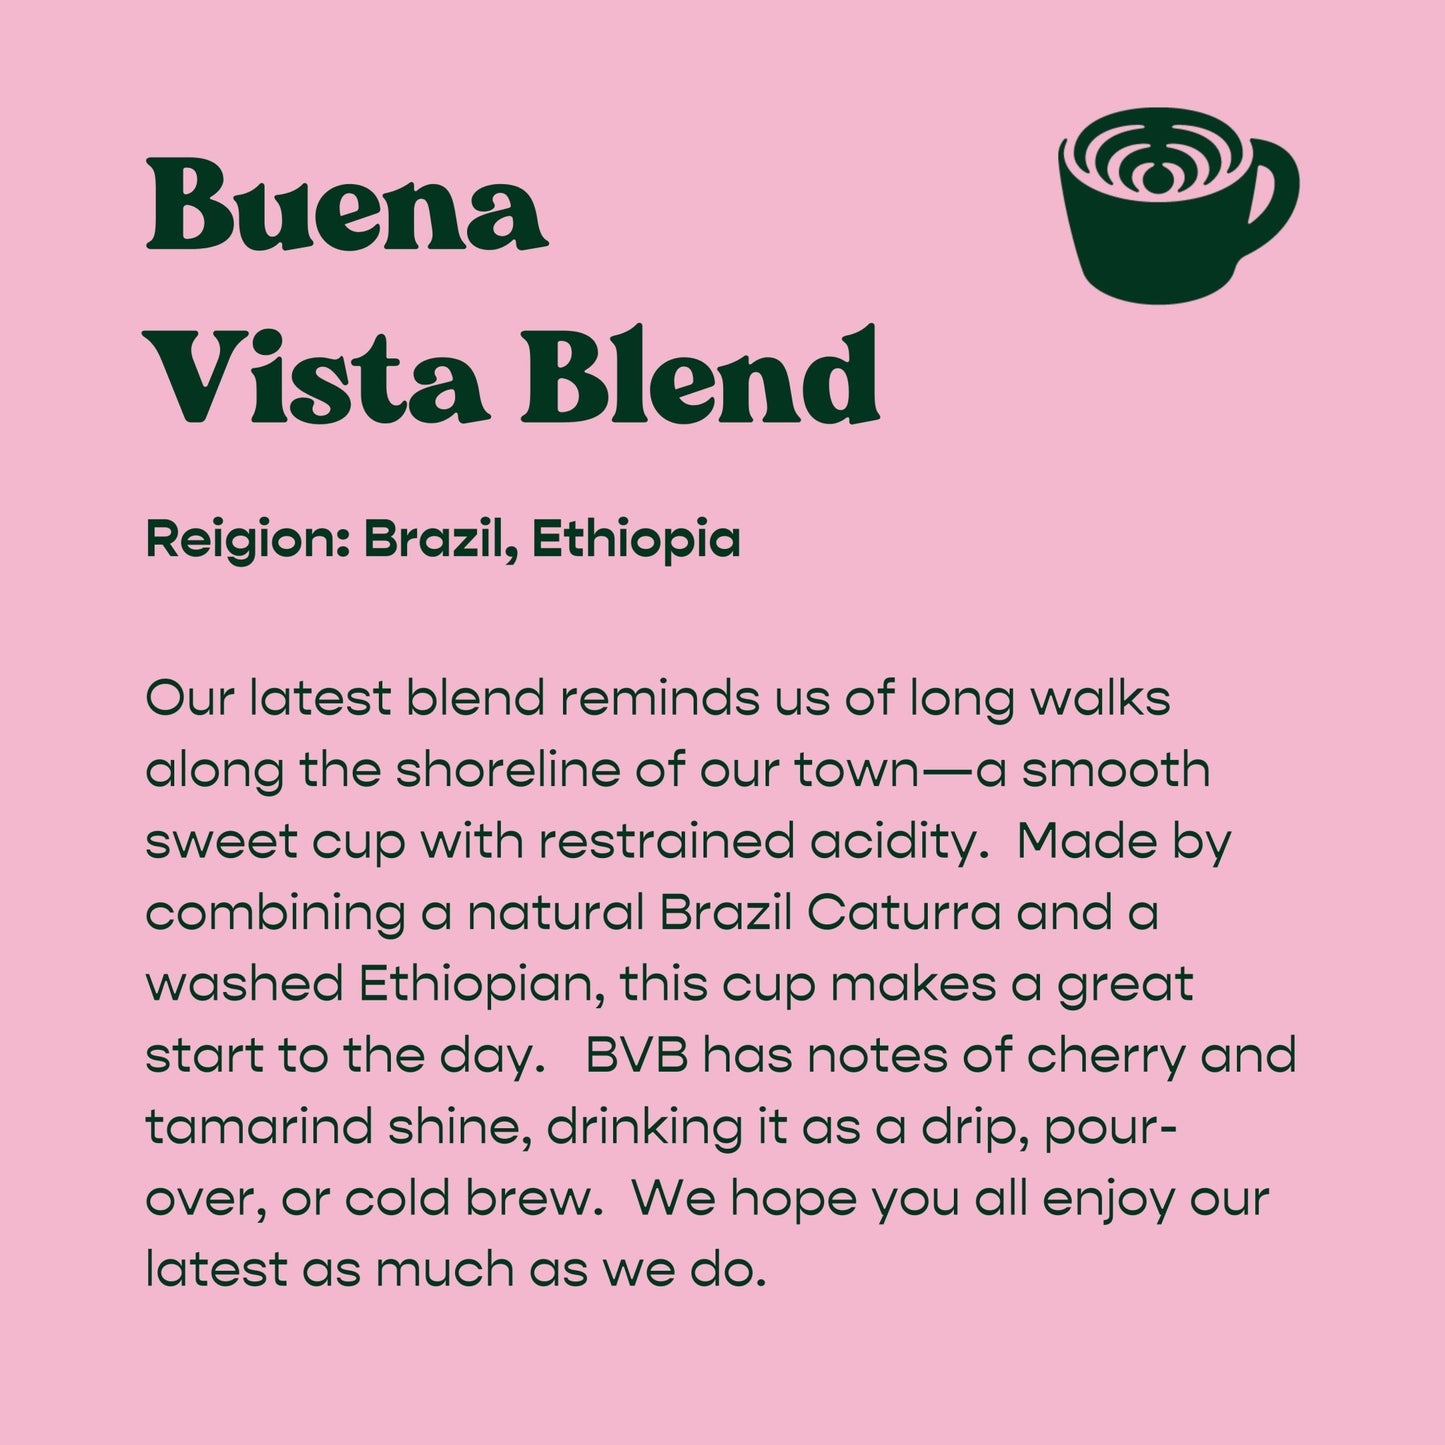 Buena Vista Blend (Medium Roast) - Sound Coffee